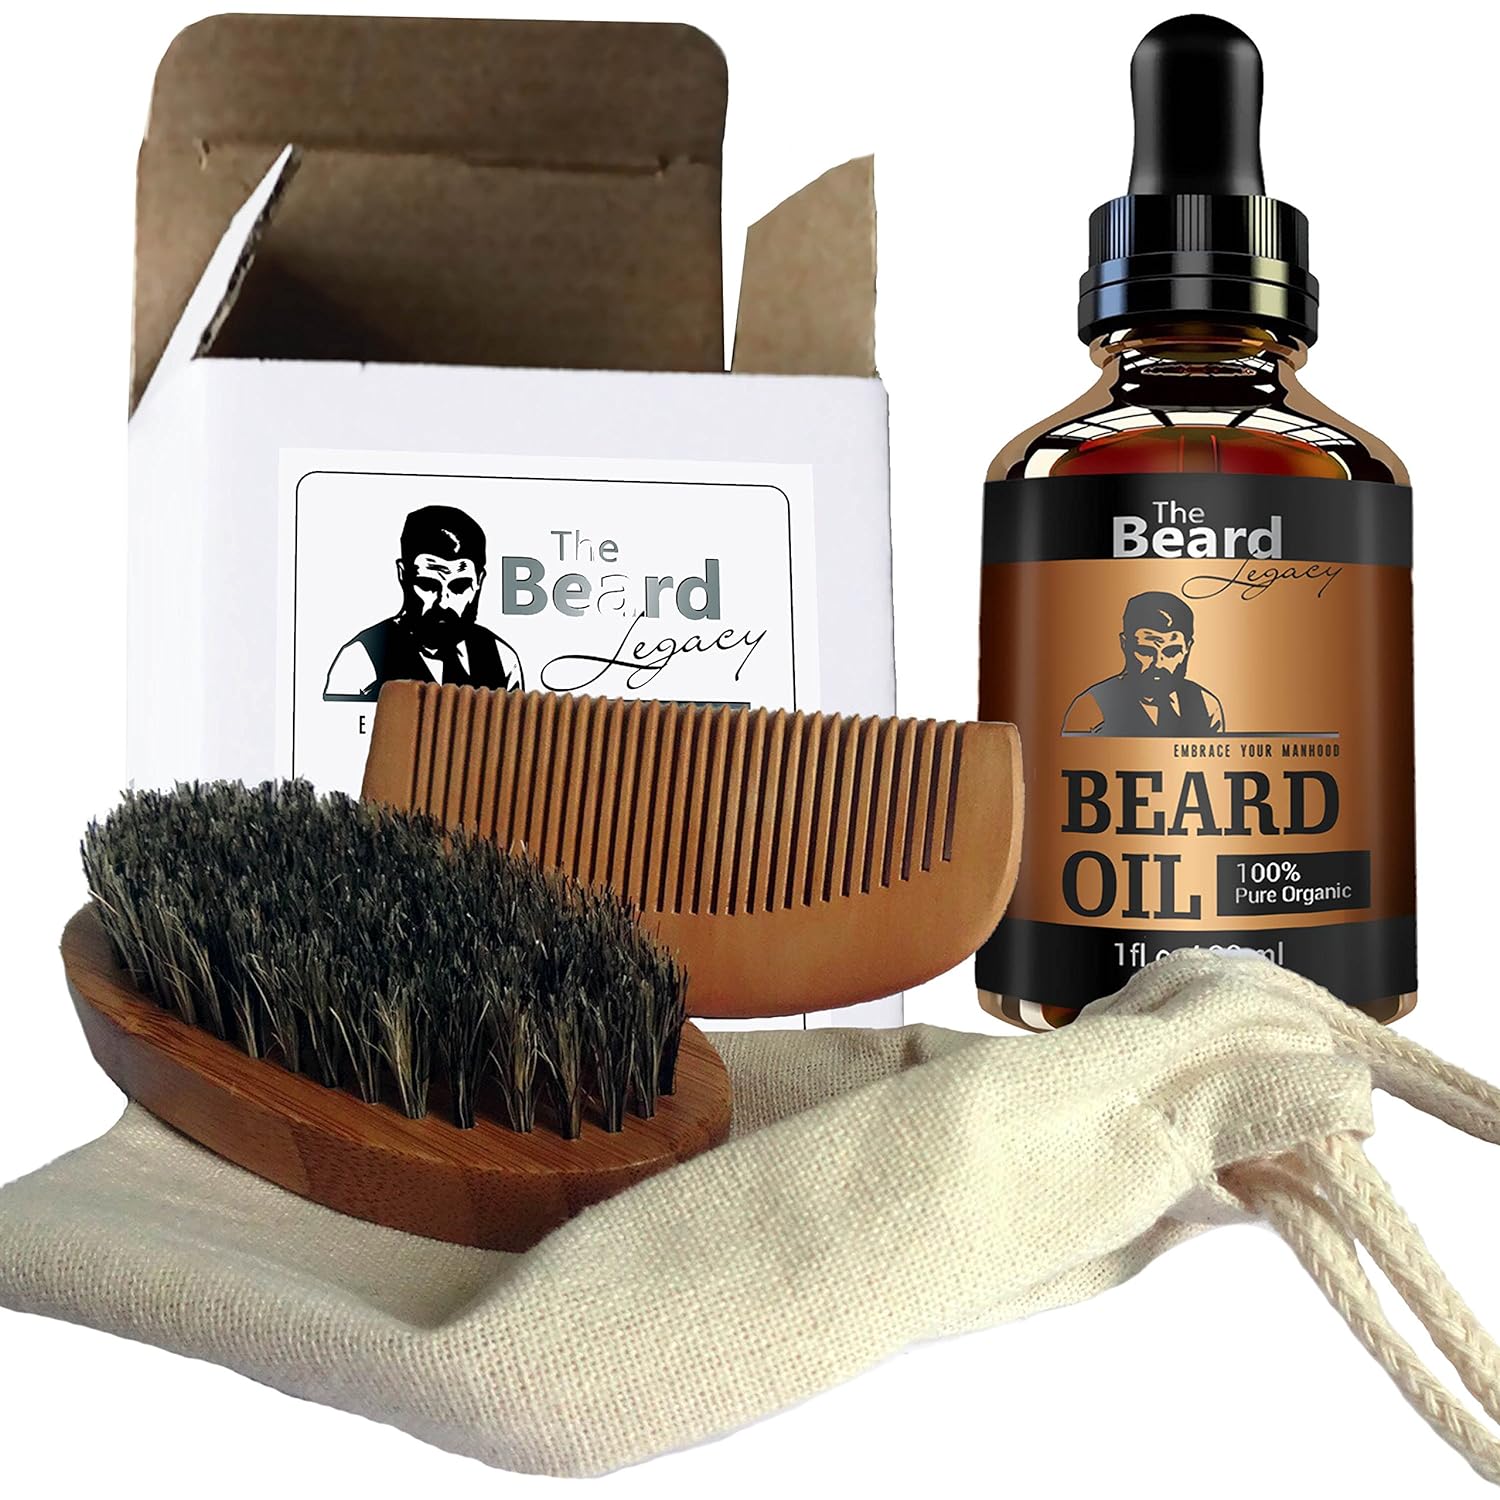 How Often Should You Use Beard Oil?